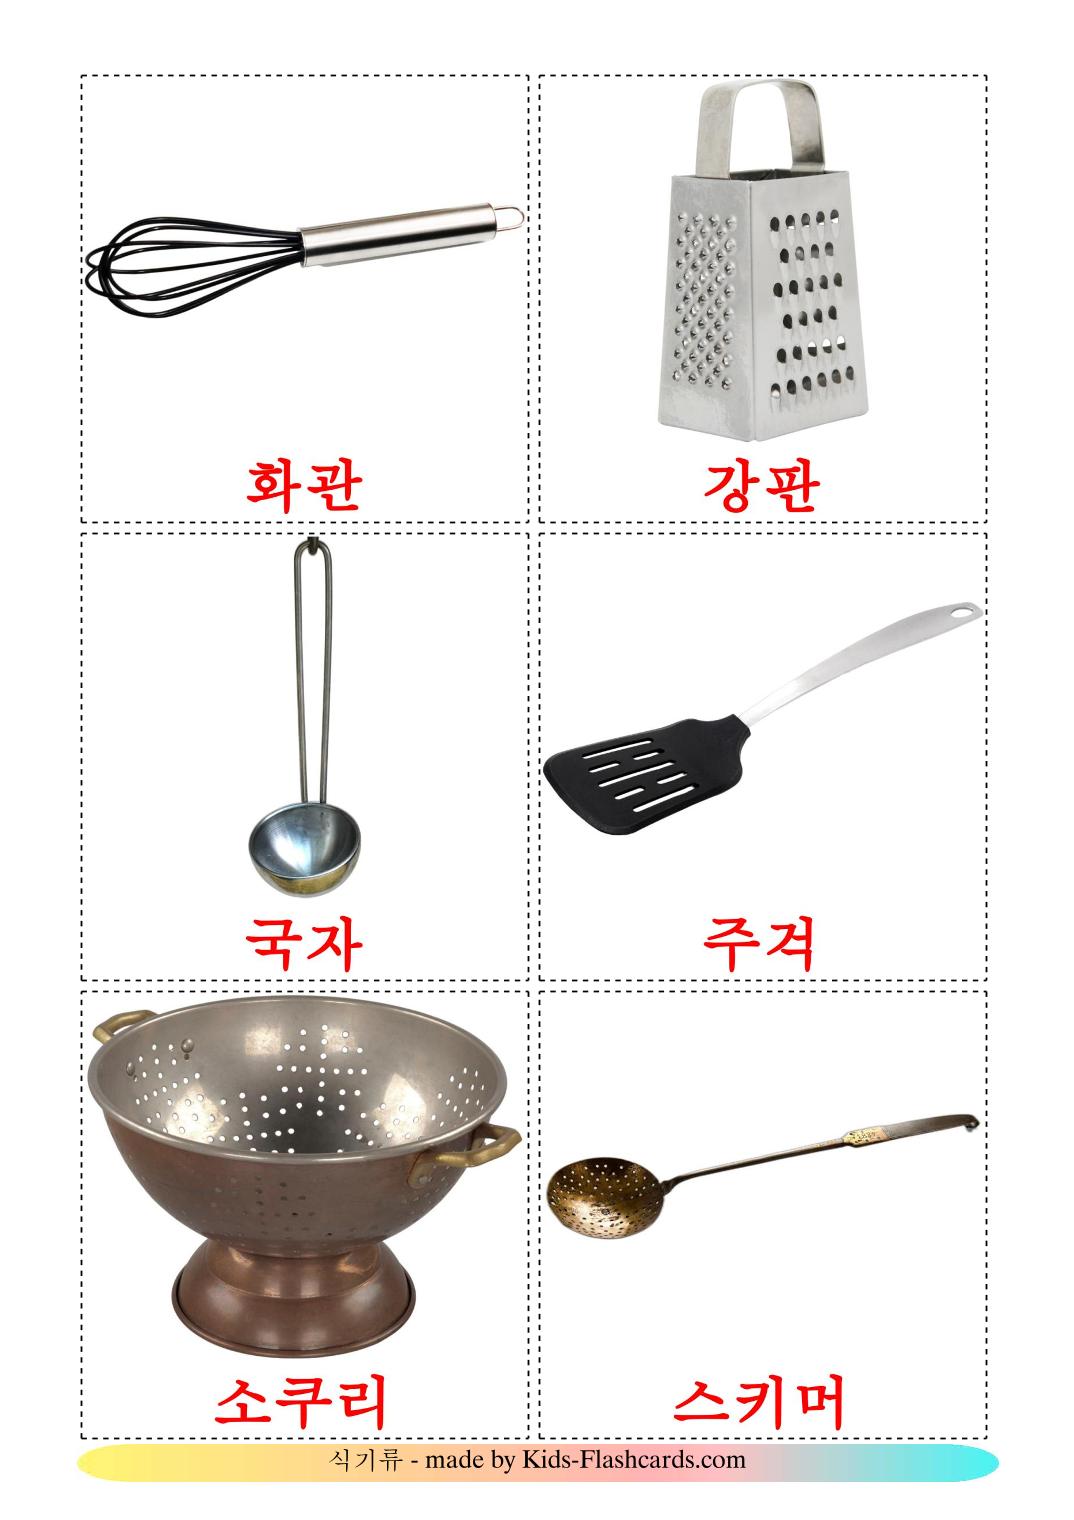 Ustensiles de cuisine - 31 Flashcards coréen imprimables gratuitement